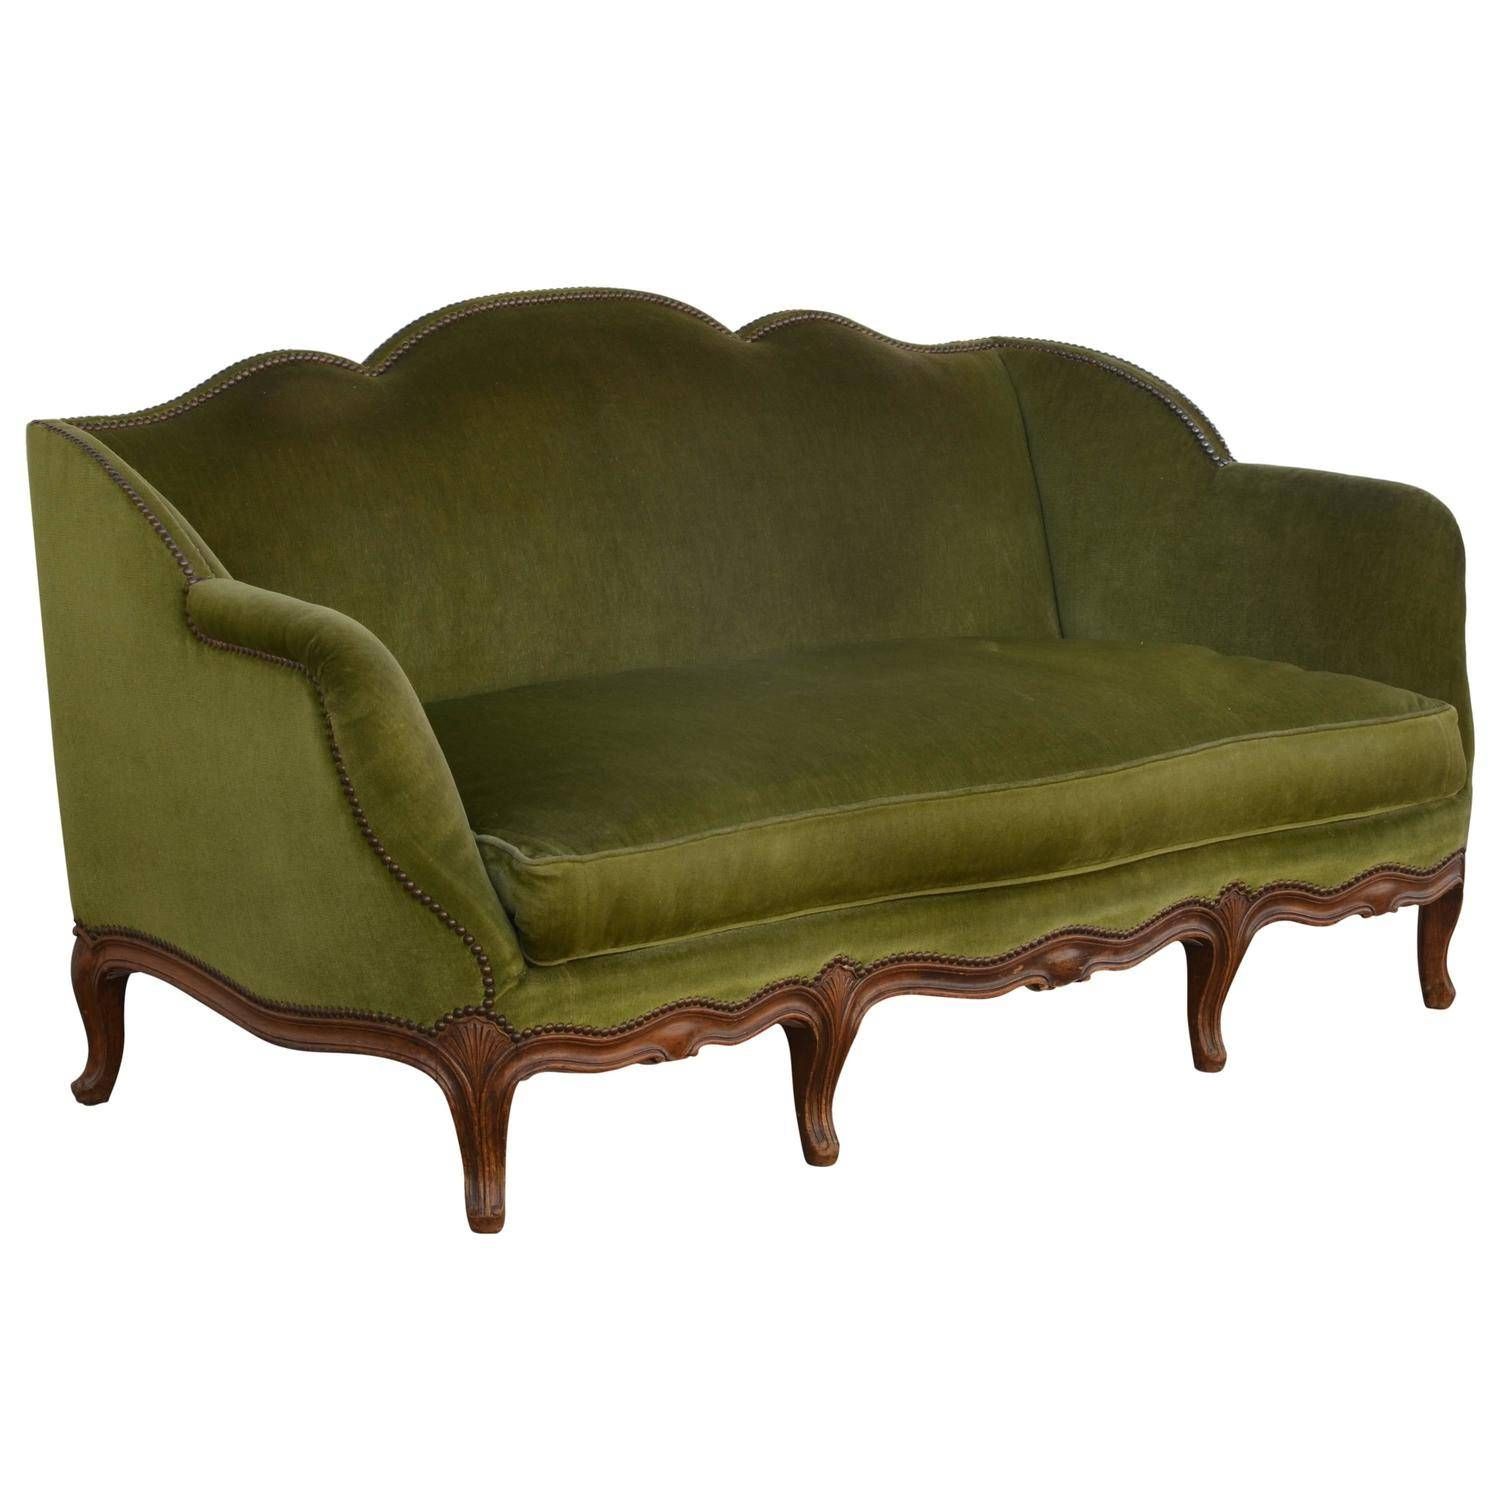 Elegant French, 1940s Louis Xv Style Green Velvet Sofa At 1stdibs Intended For French Style Sofas (Photo 11 of 25)